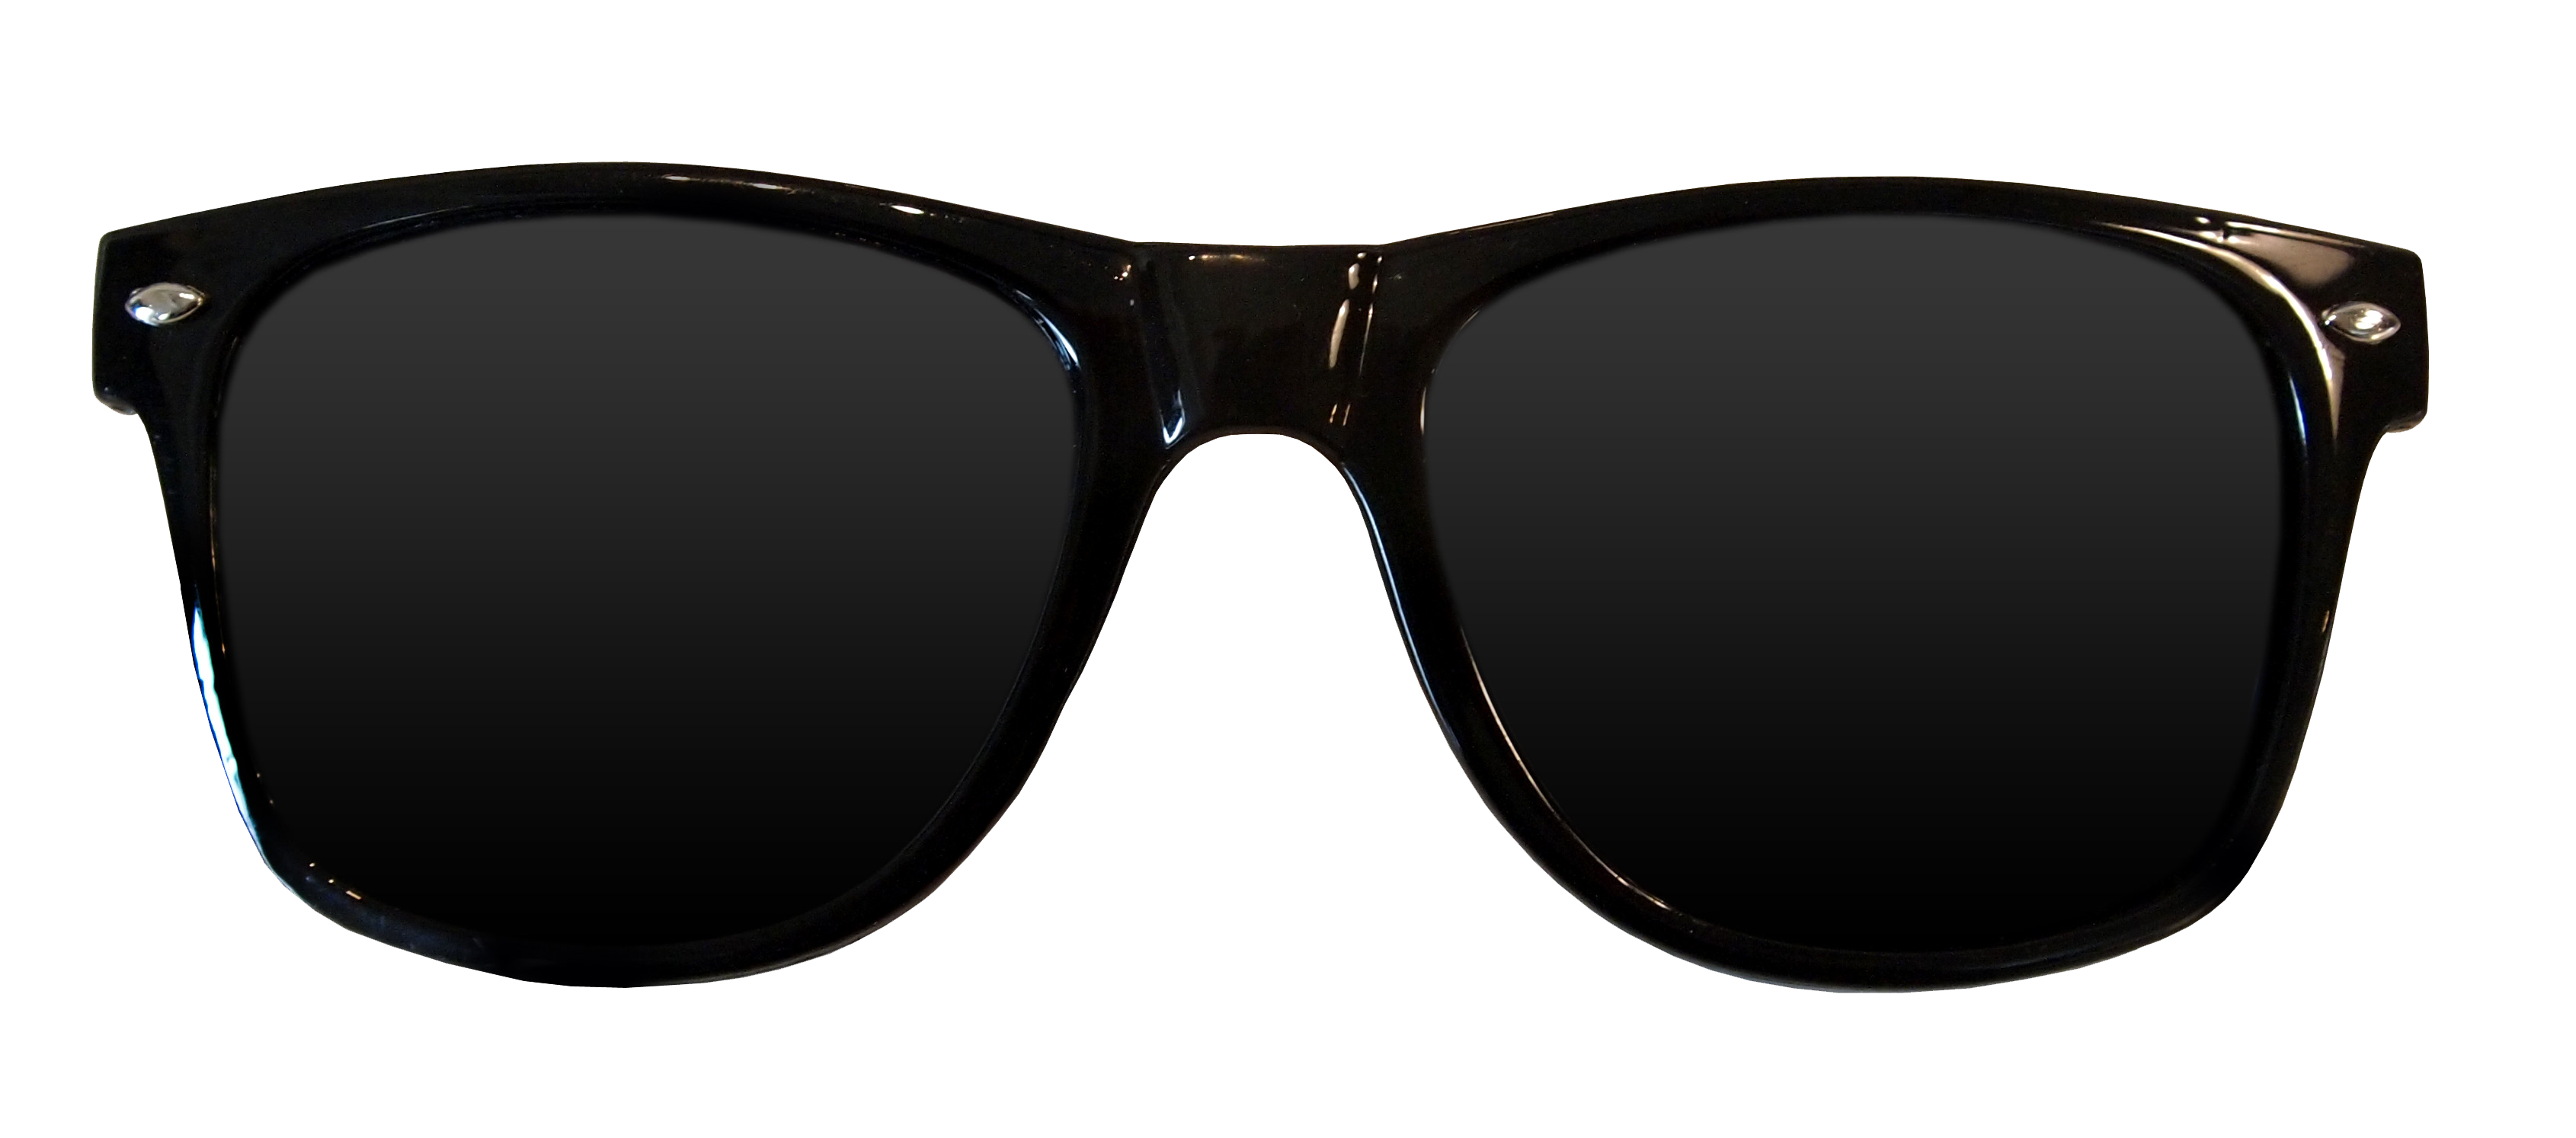 Similar Sunglasses PNG Image